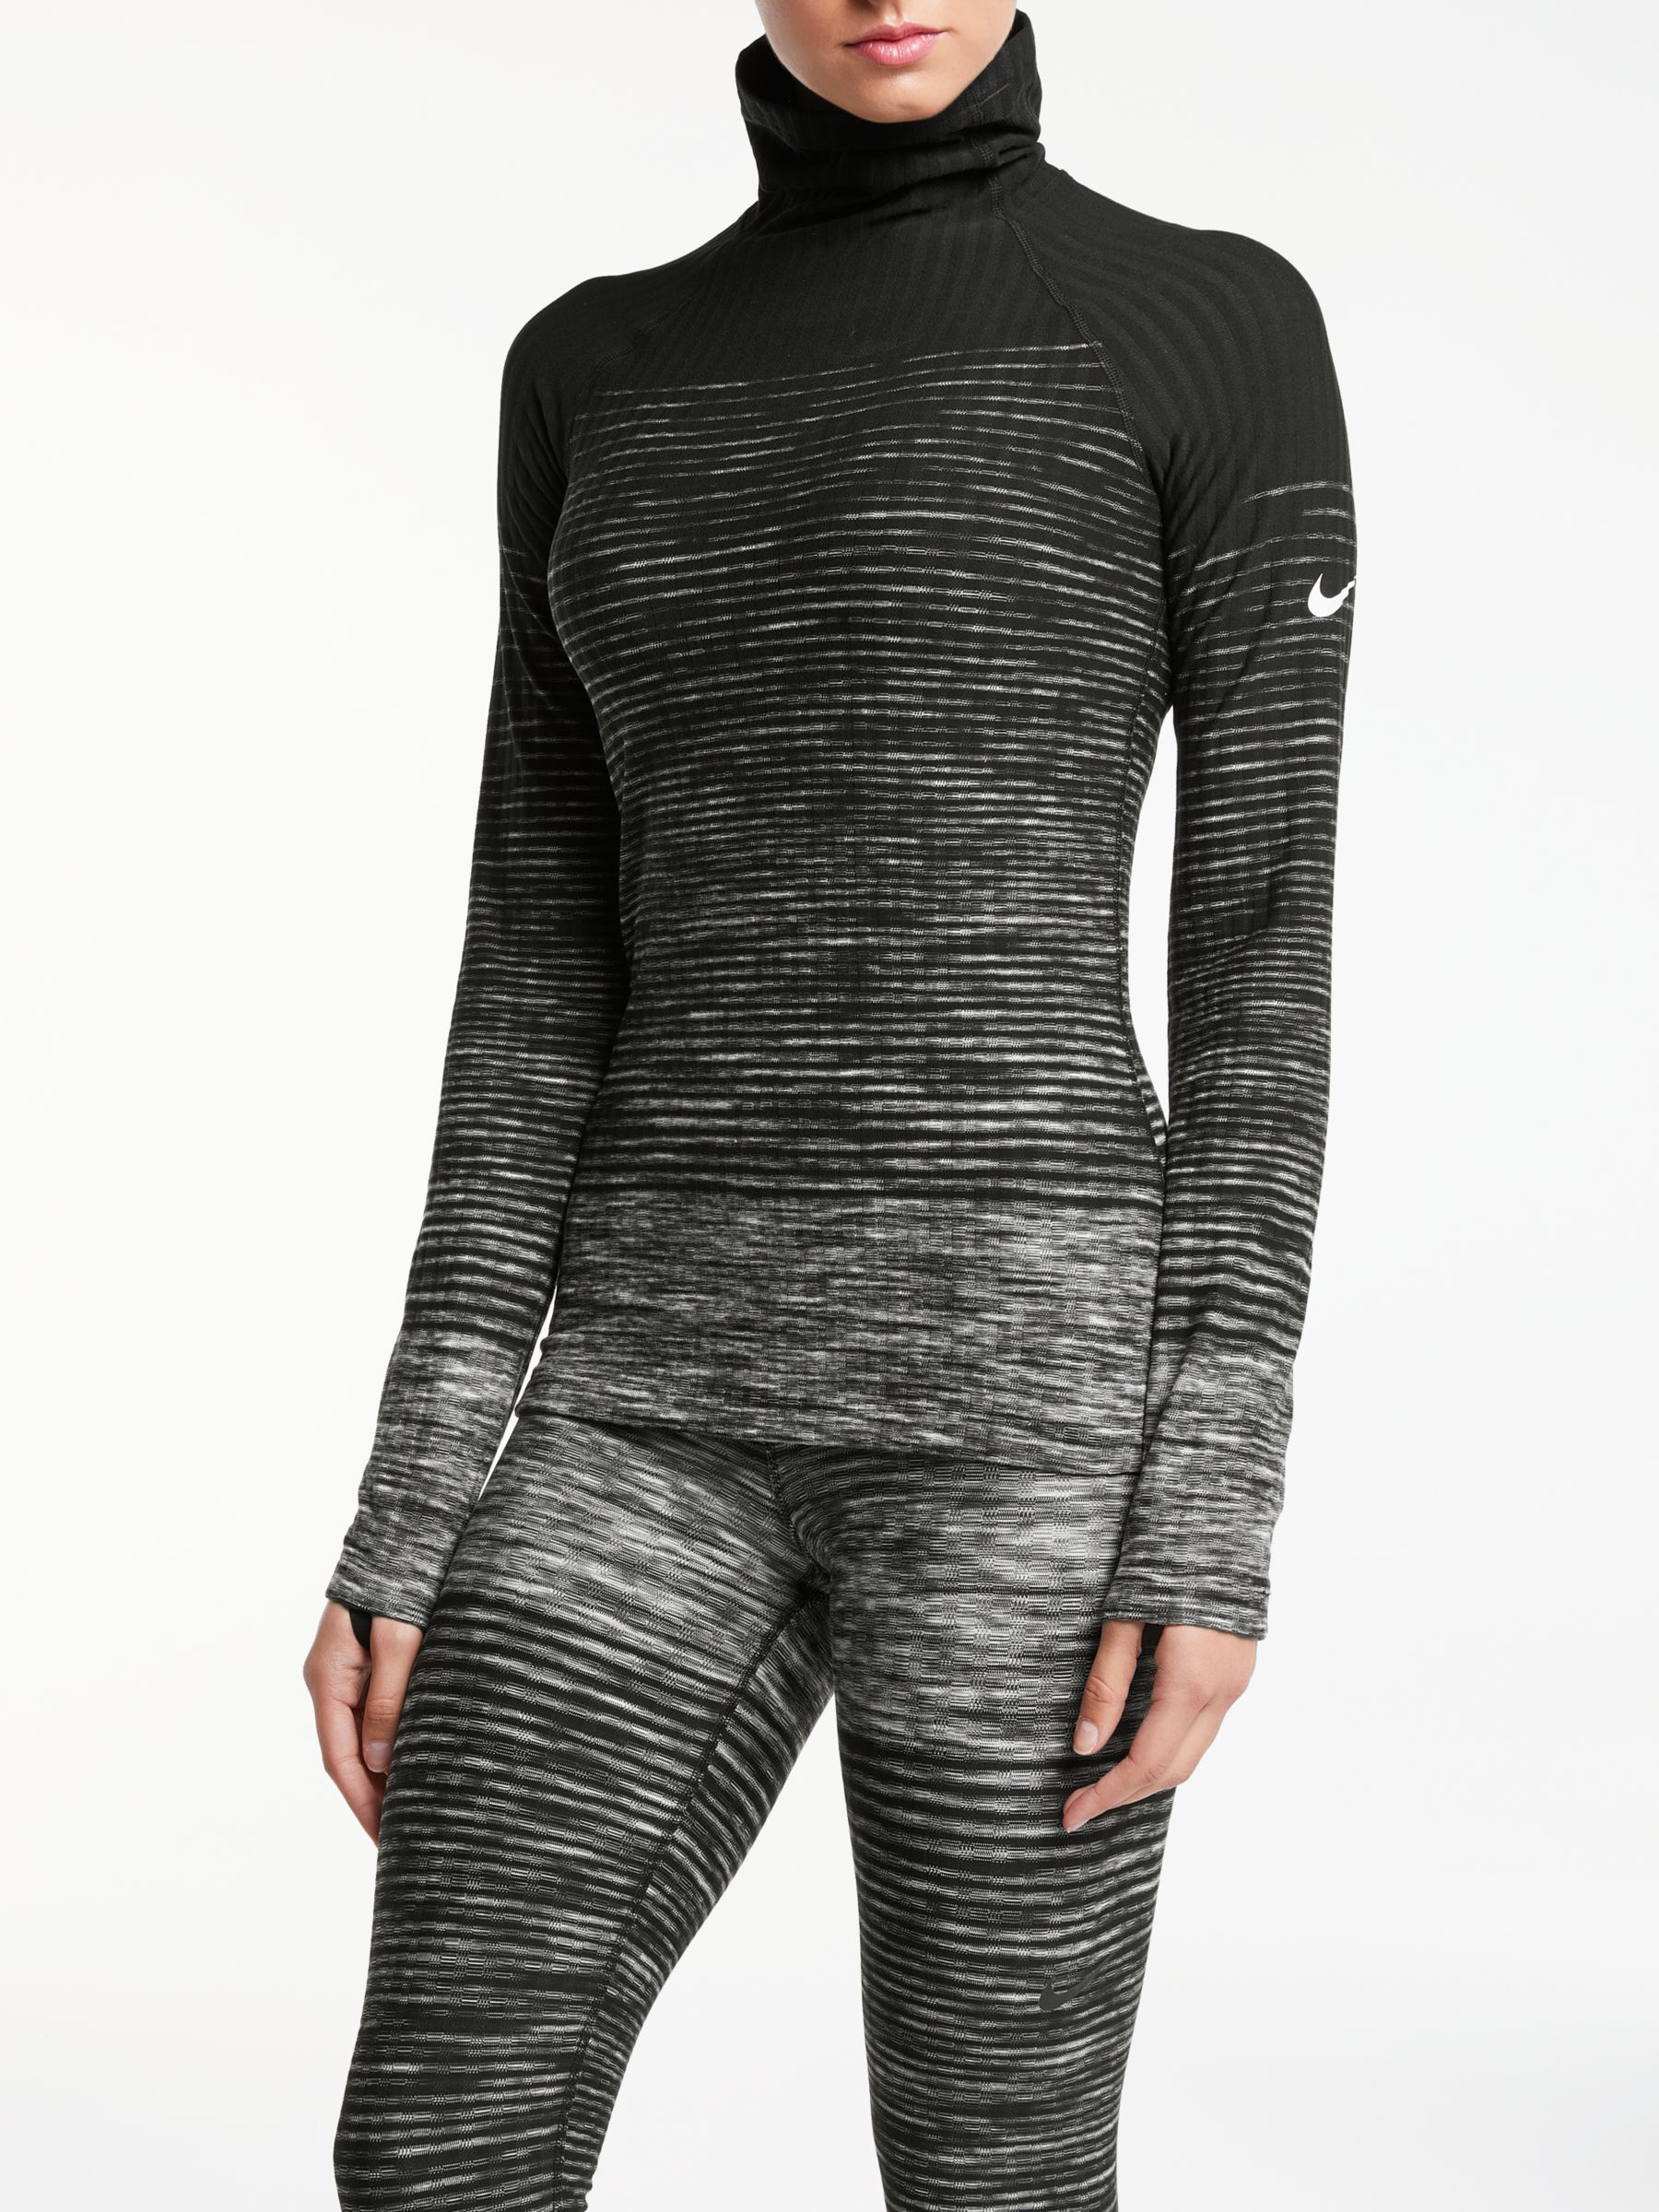 Buy Nike Pro Hyperwarm Women's Compression Tights Black White